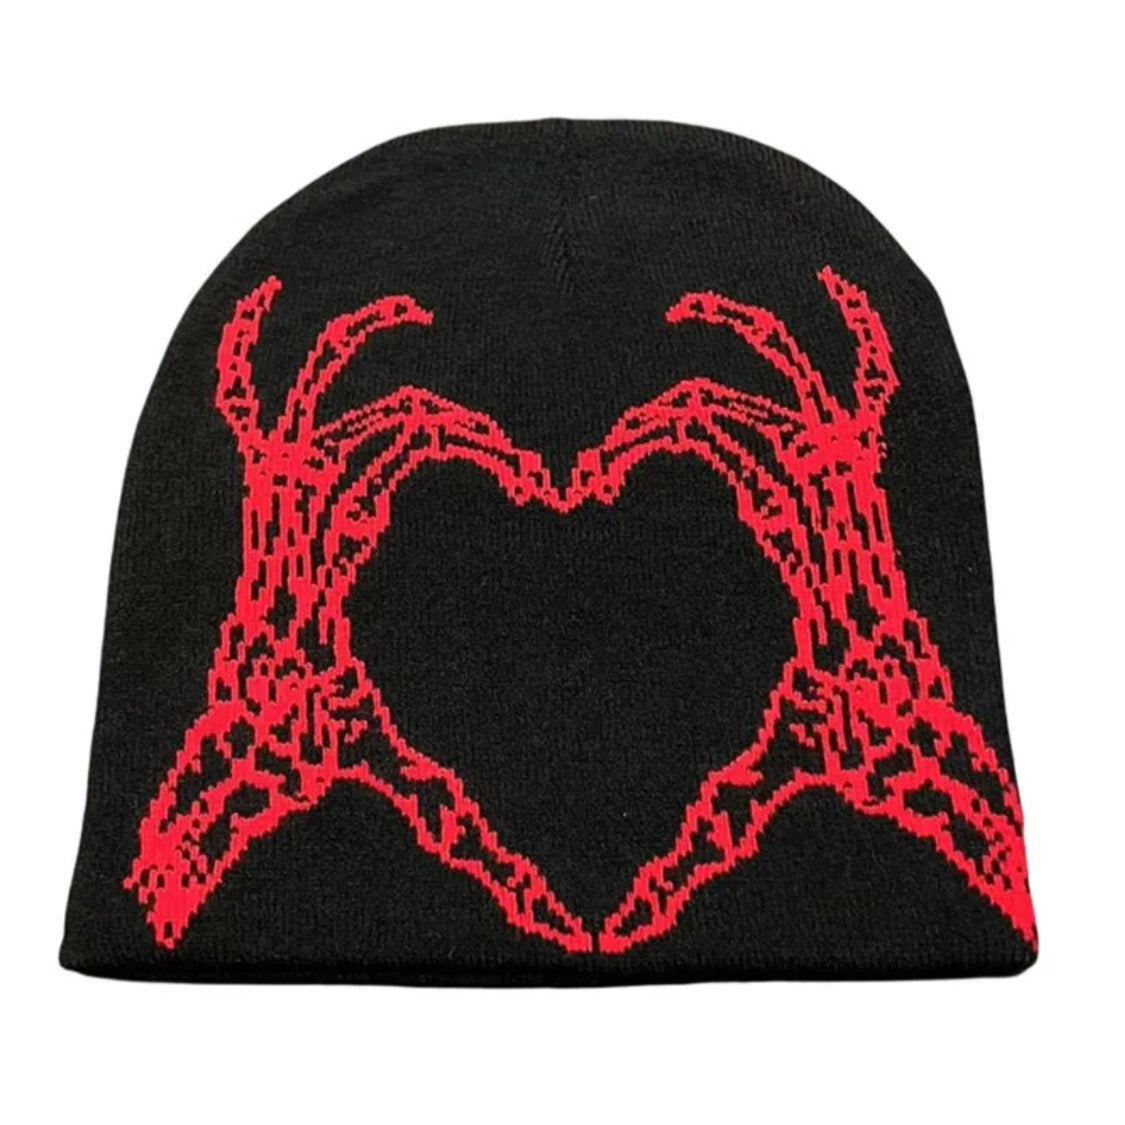 red skeleton heart hat